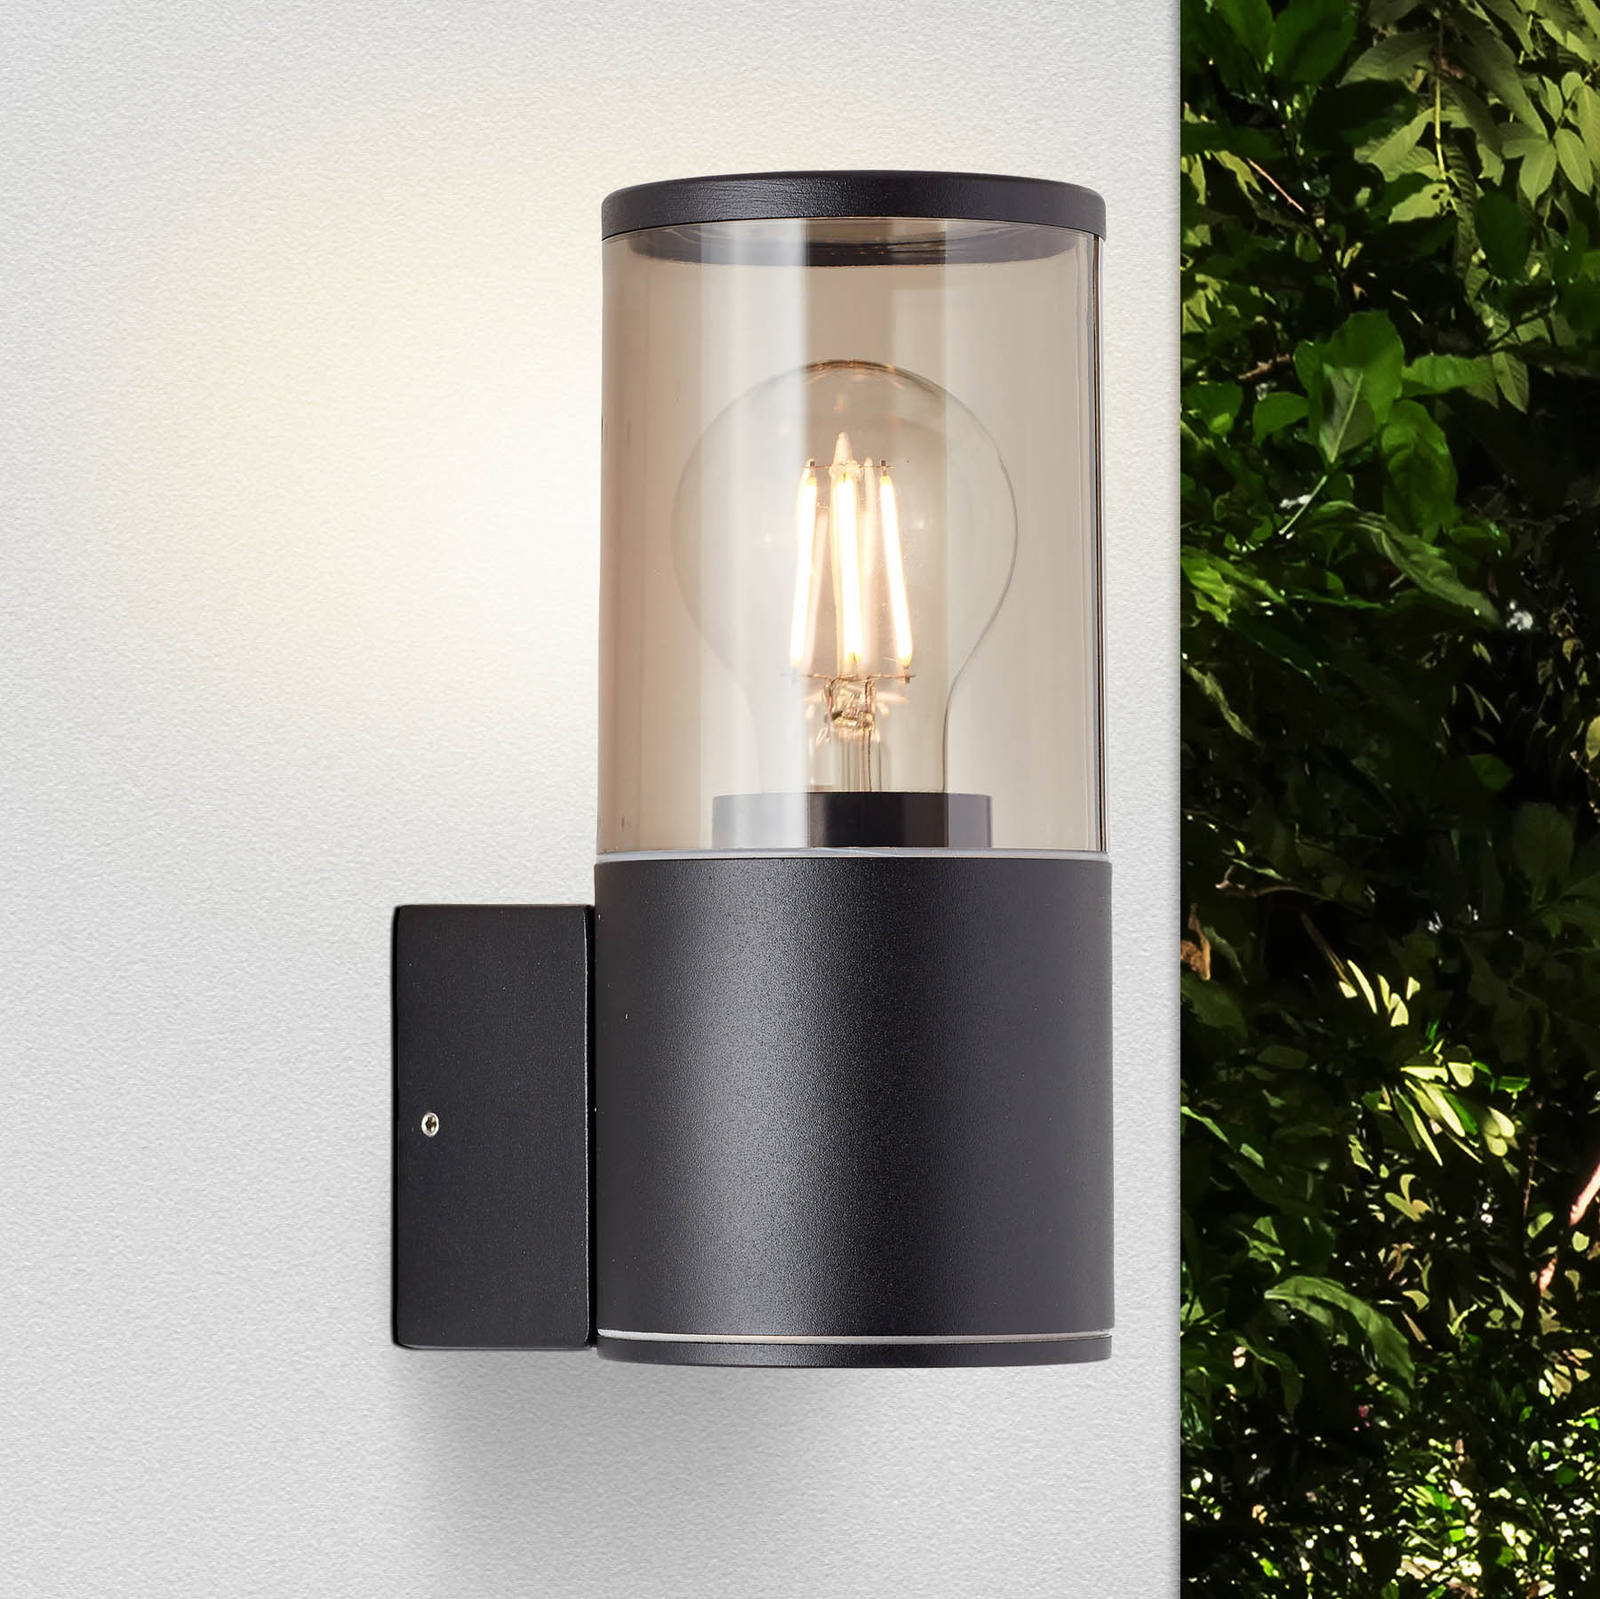 Sergioro outdoor wall light, one-bulb